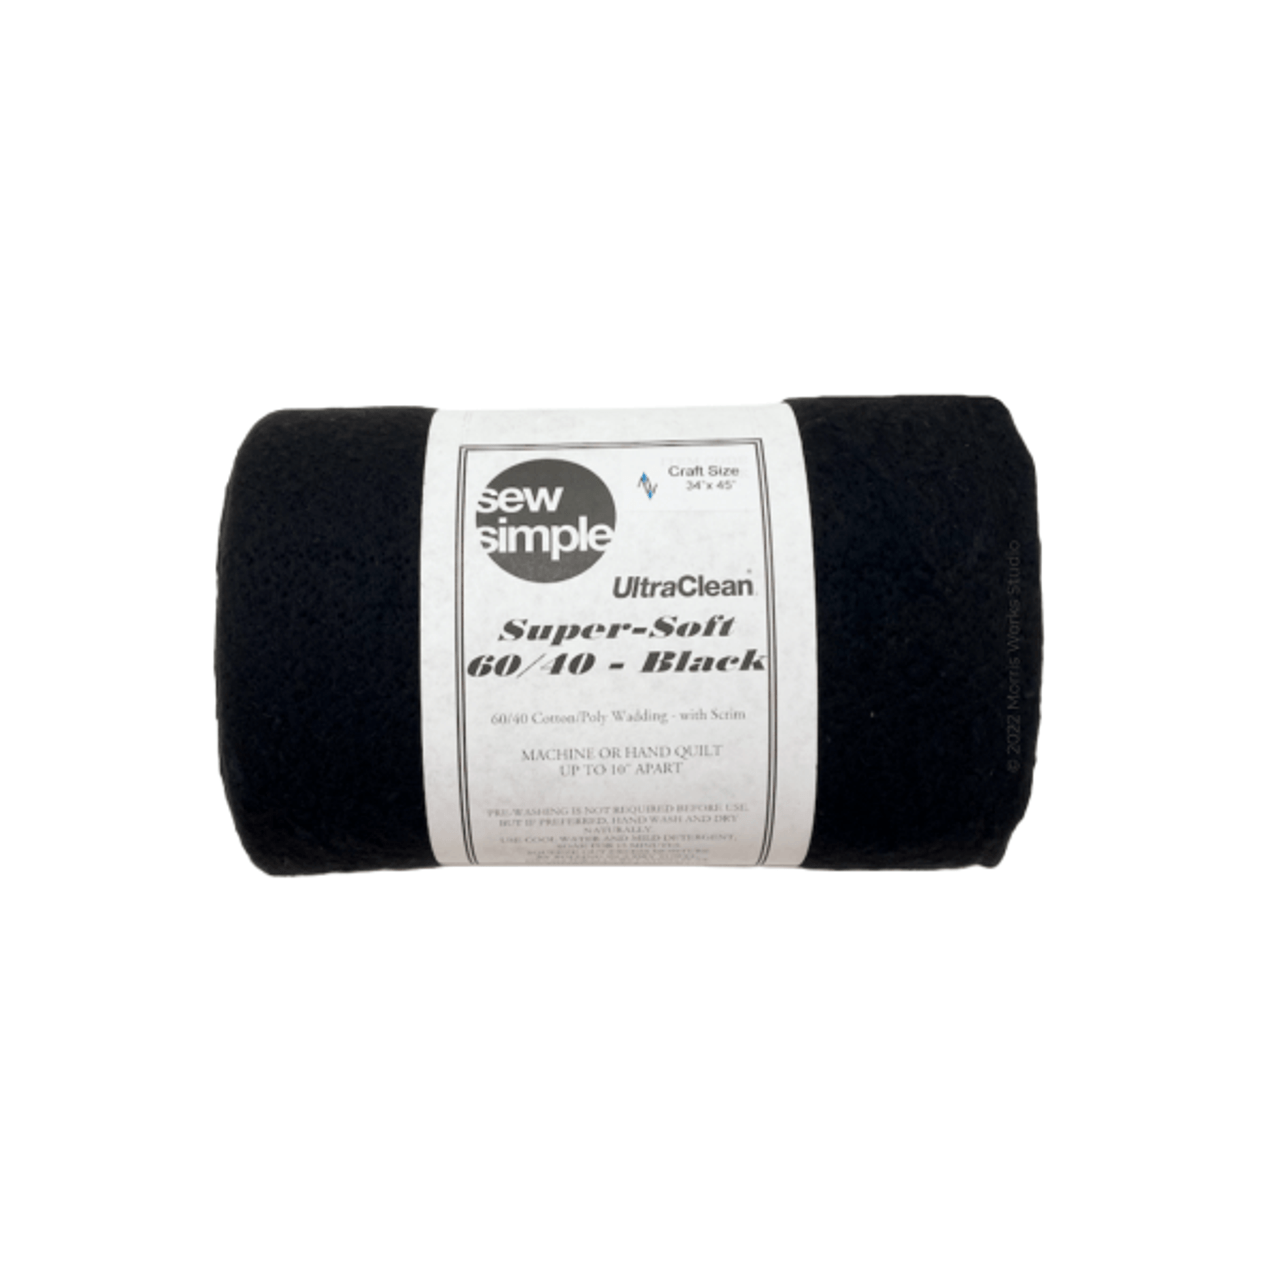 Sew Simple Super Soft Black Cotton Blend Wadding Pack Craft Size